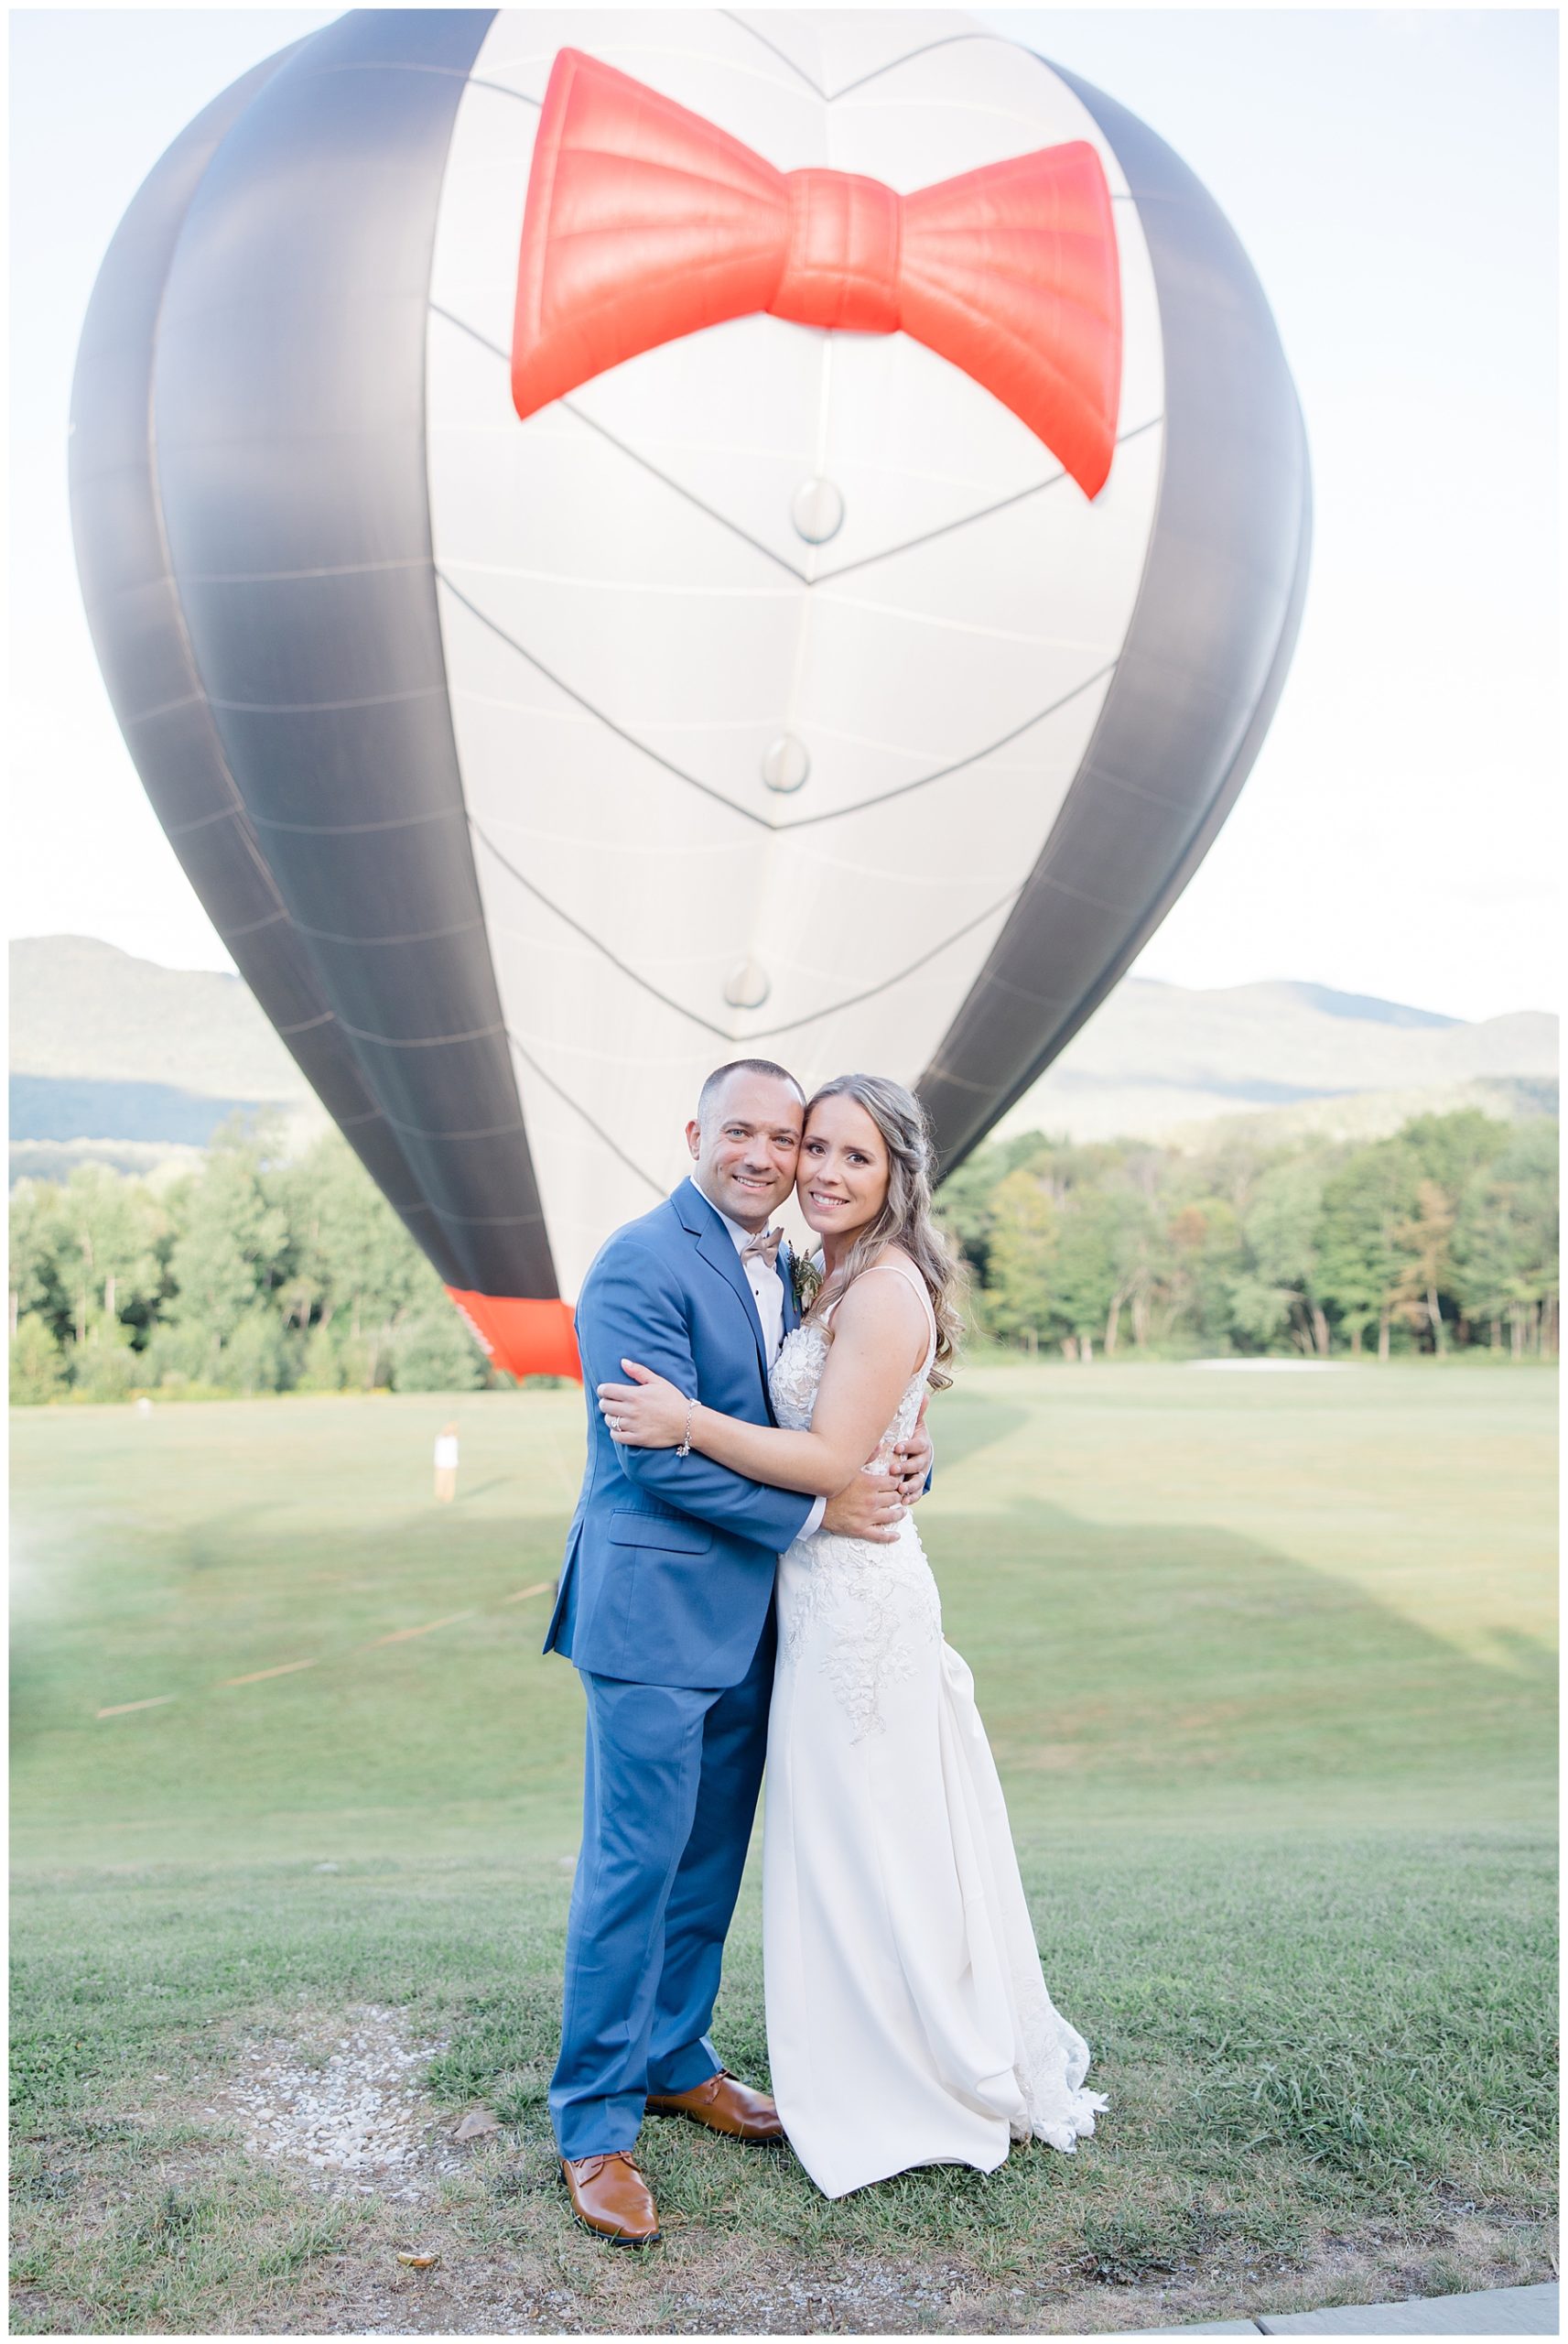 Dreamy Vermont Wedding at Mountain Top Inn & Resort with hot air balloon 